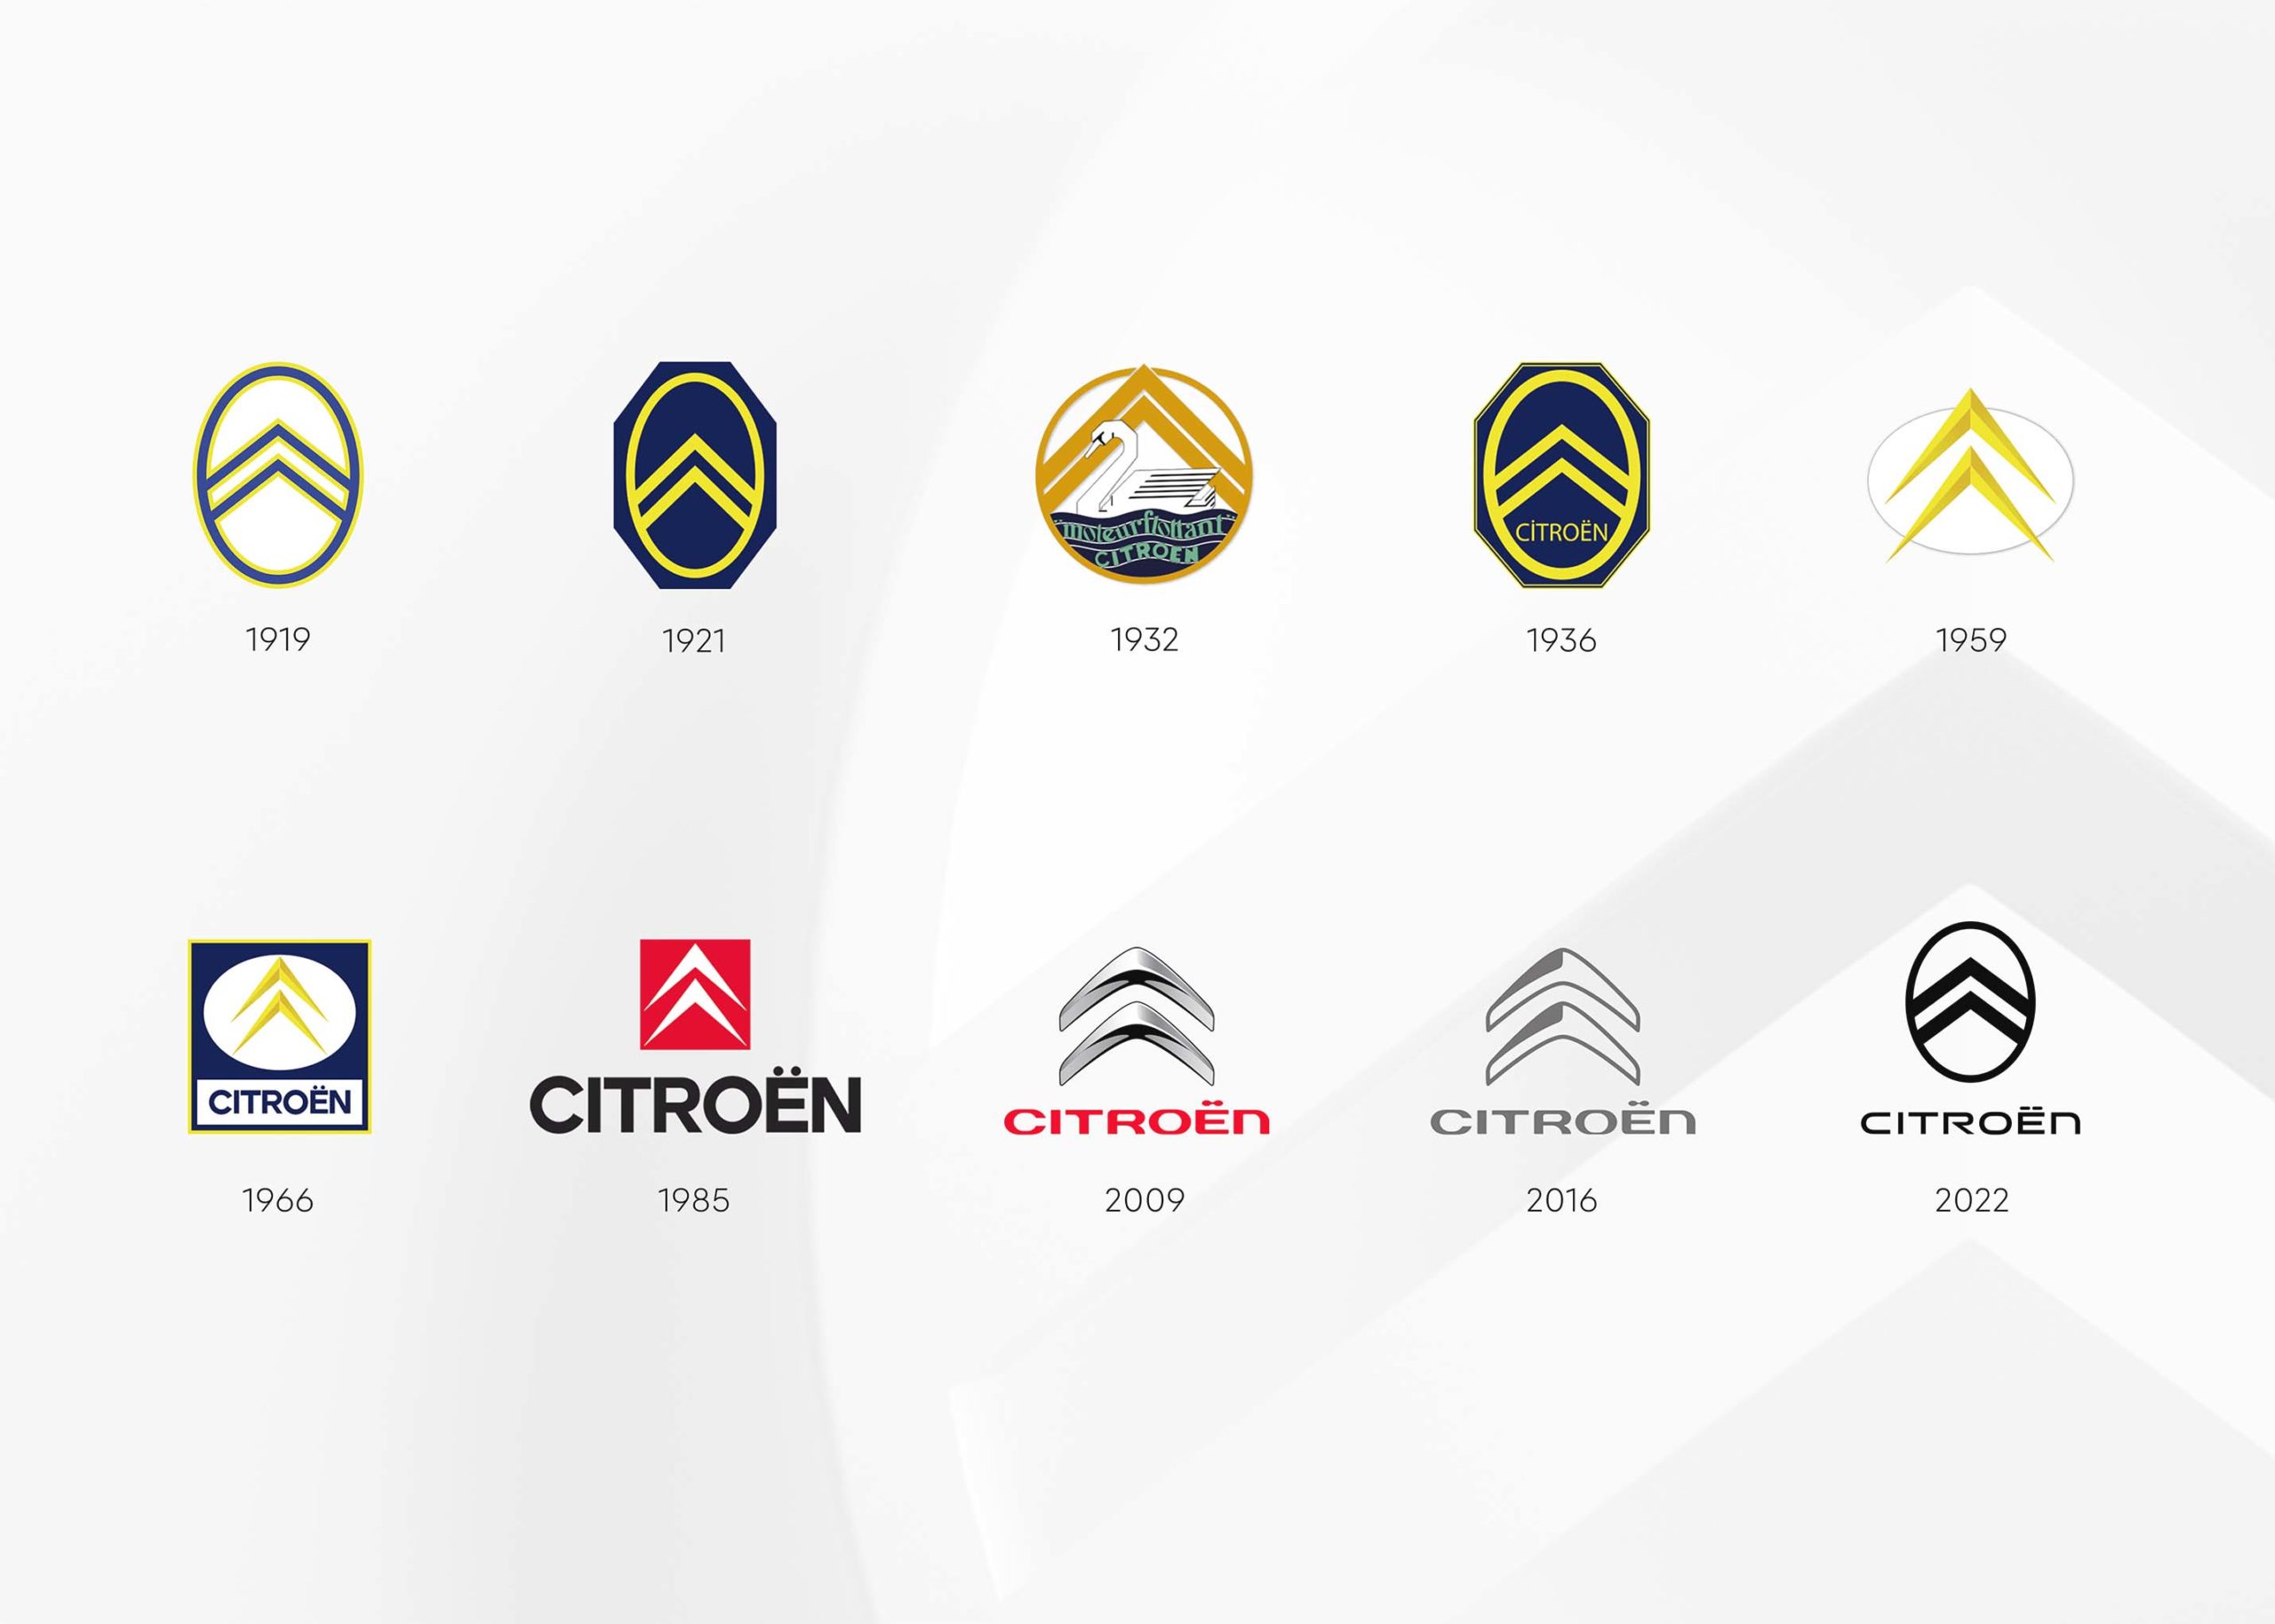 citroen-logos-throughout-history-1919-2022